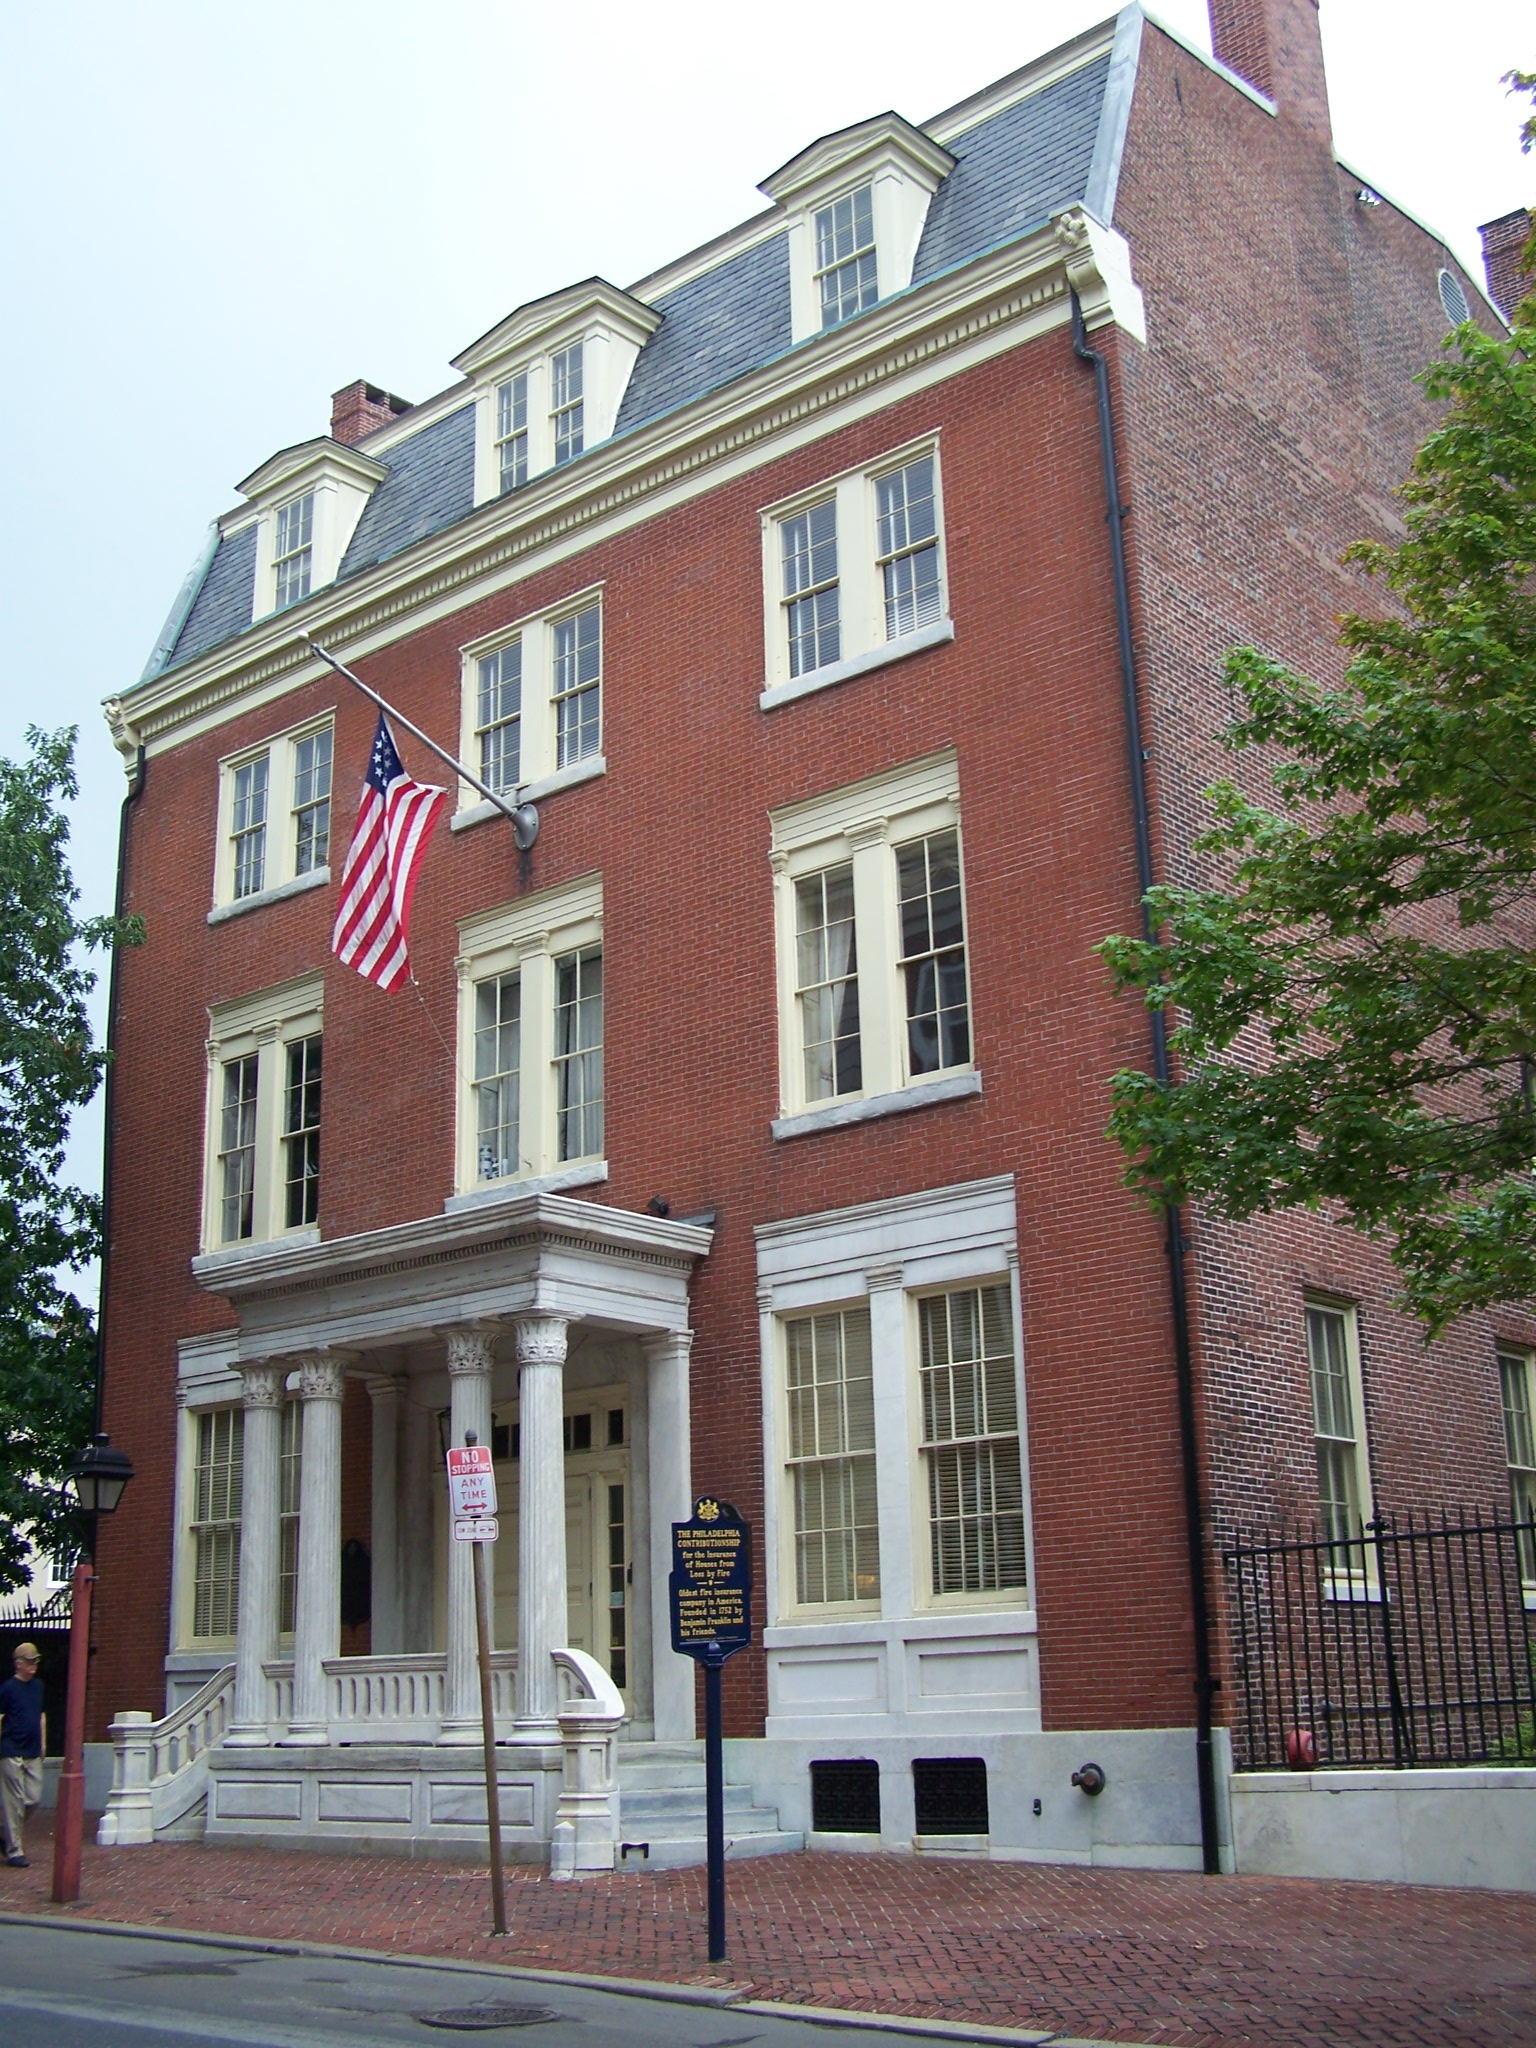 The Philadelphia Contributionship Building